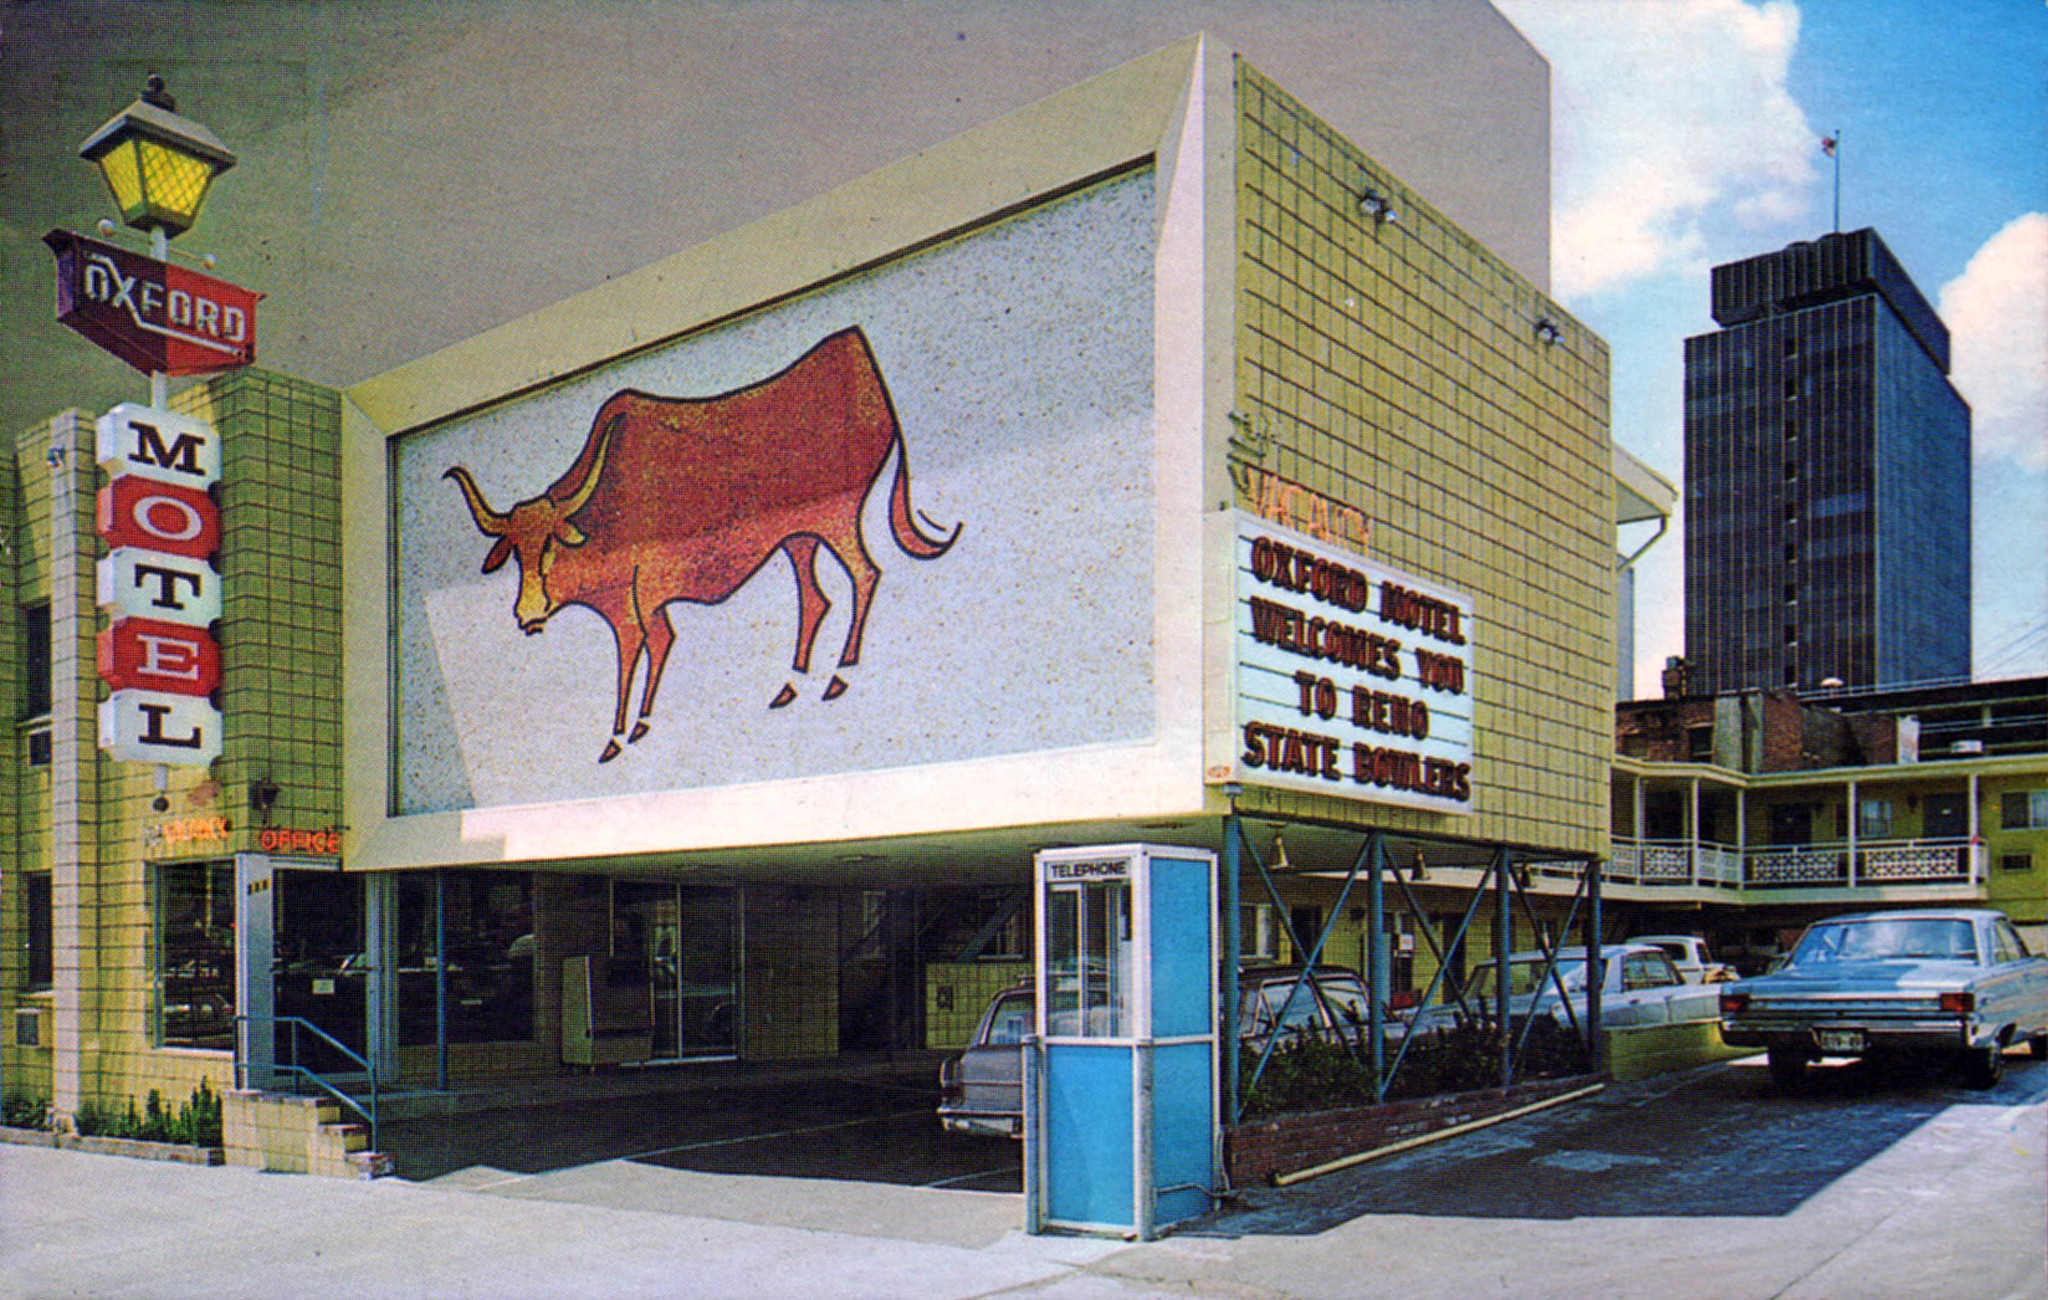 Oxford Motel - 111 Lake Street, Reno, Nevada U.S.A. - 1960's